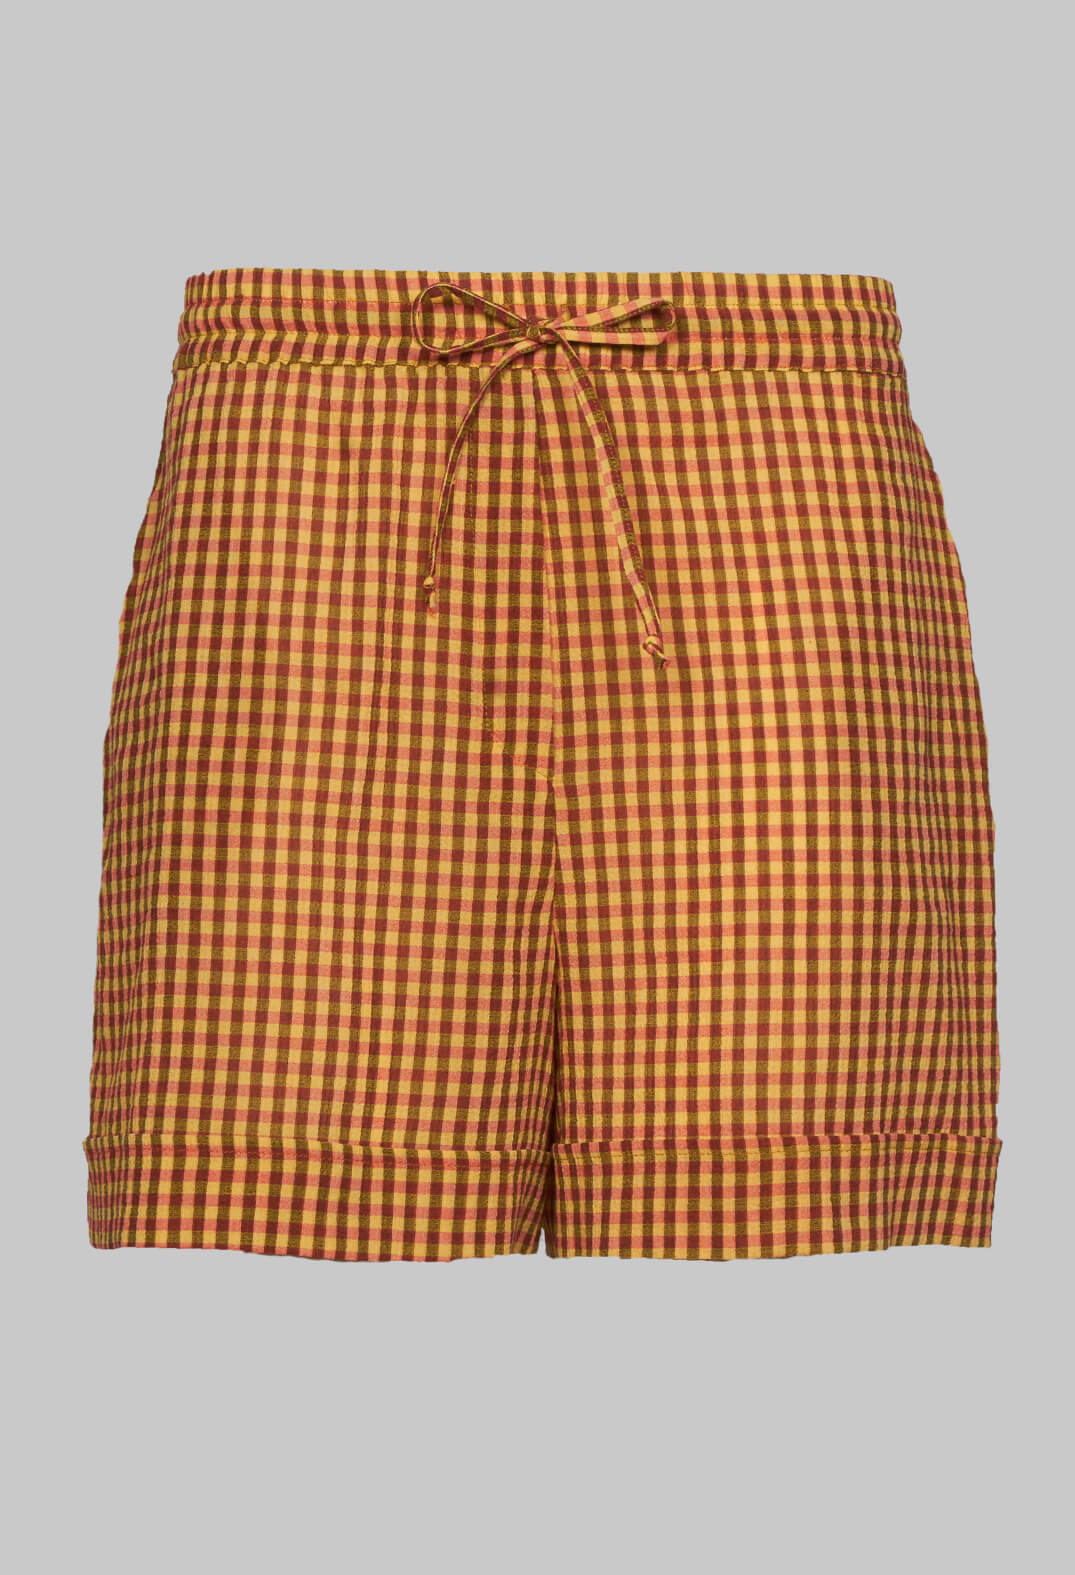 Beatrice B orange check shorts 